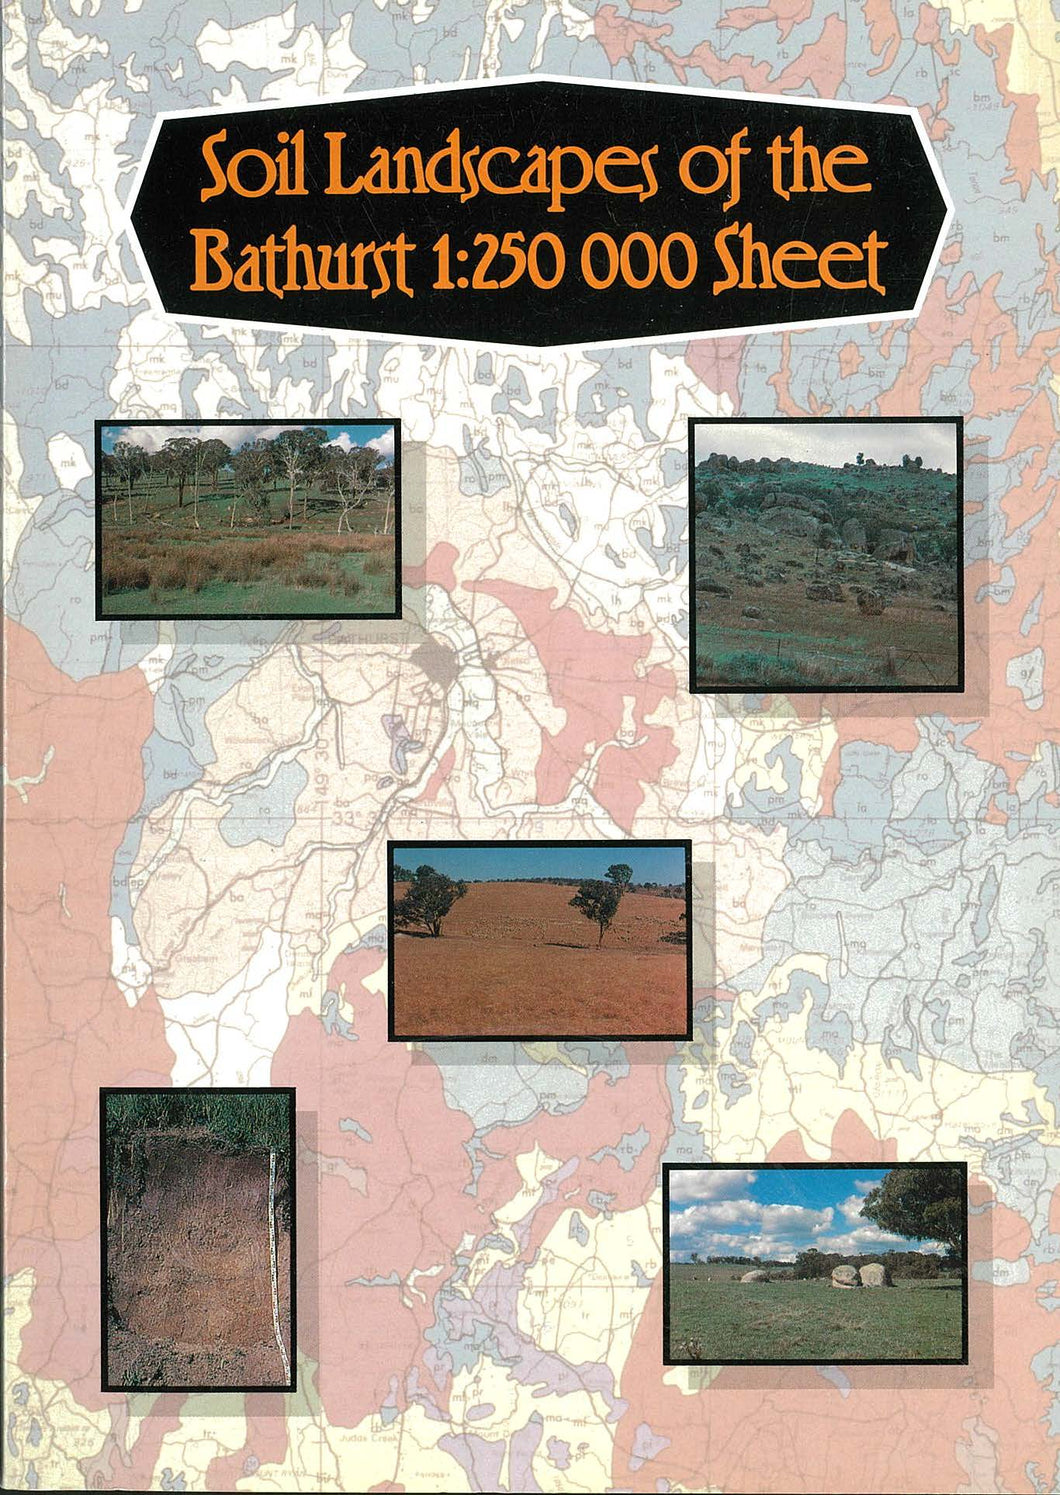 Soil Landscapes of the Bathurst 1:250 000 Sheet report cover